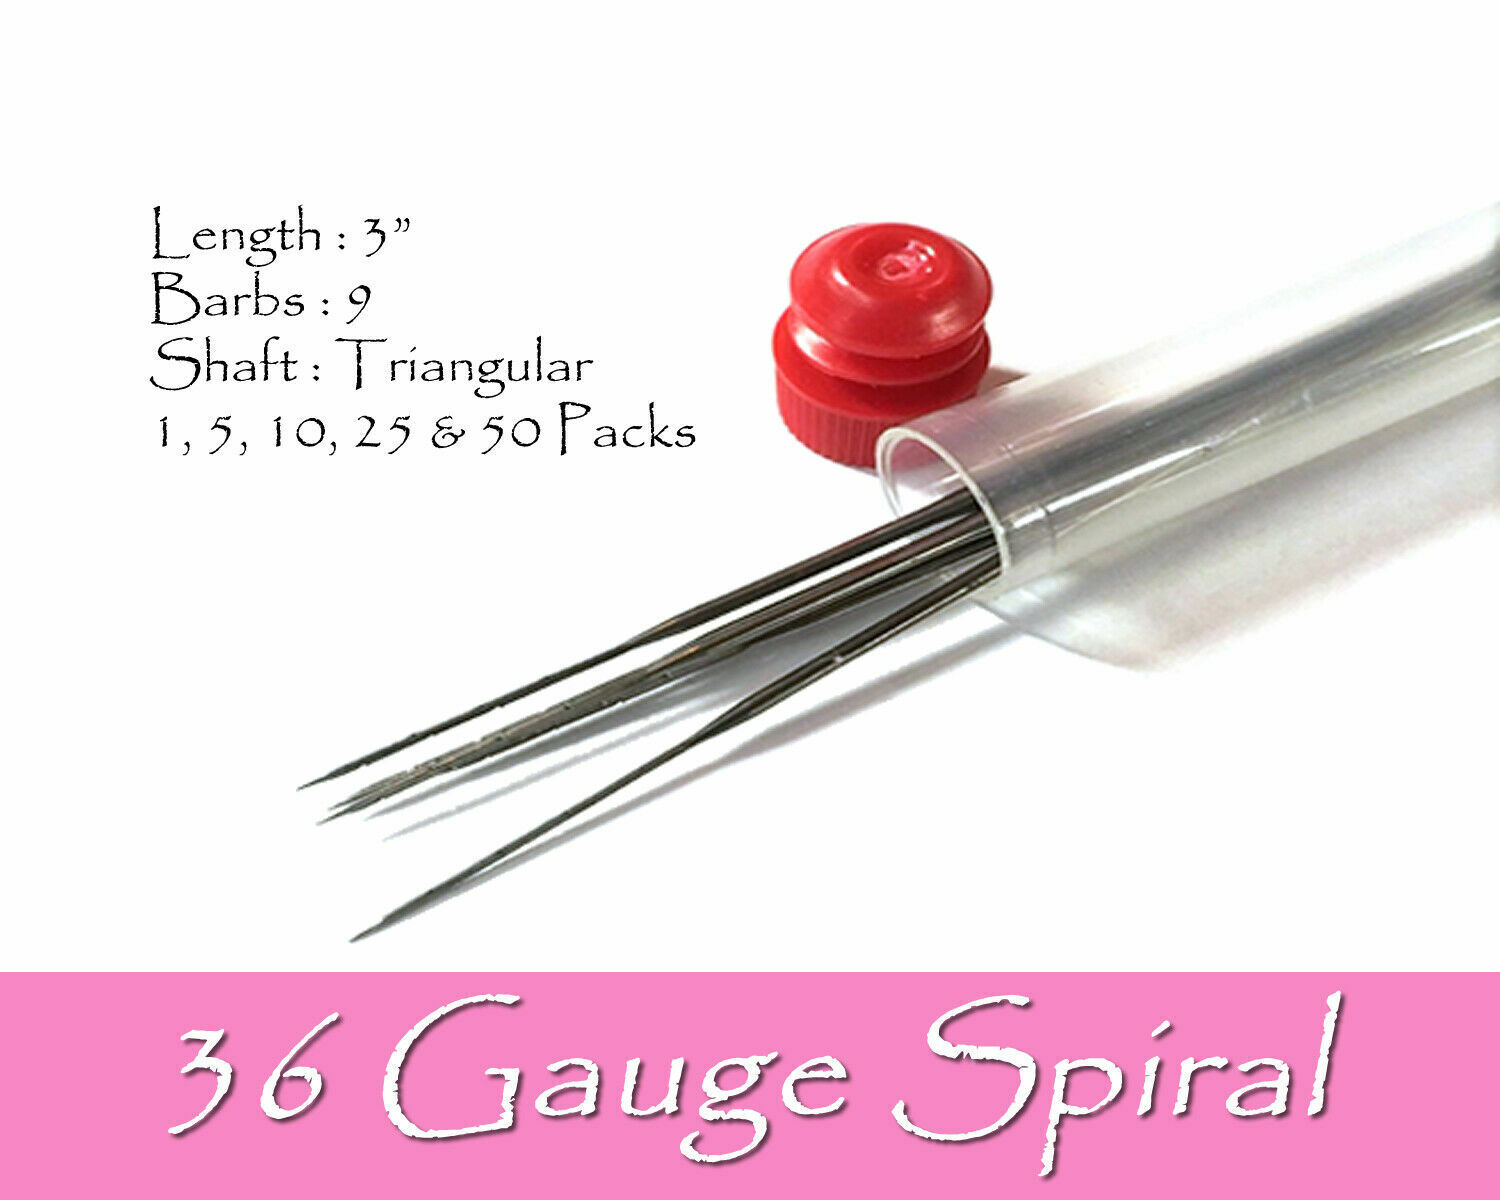 36 Gauge Under Branded goods blast sales Spiral felting needles.